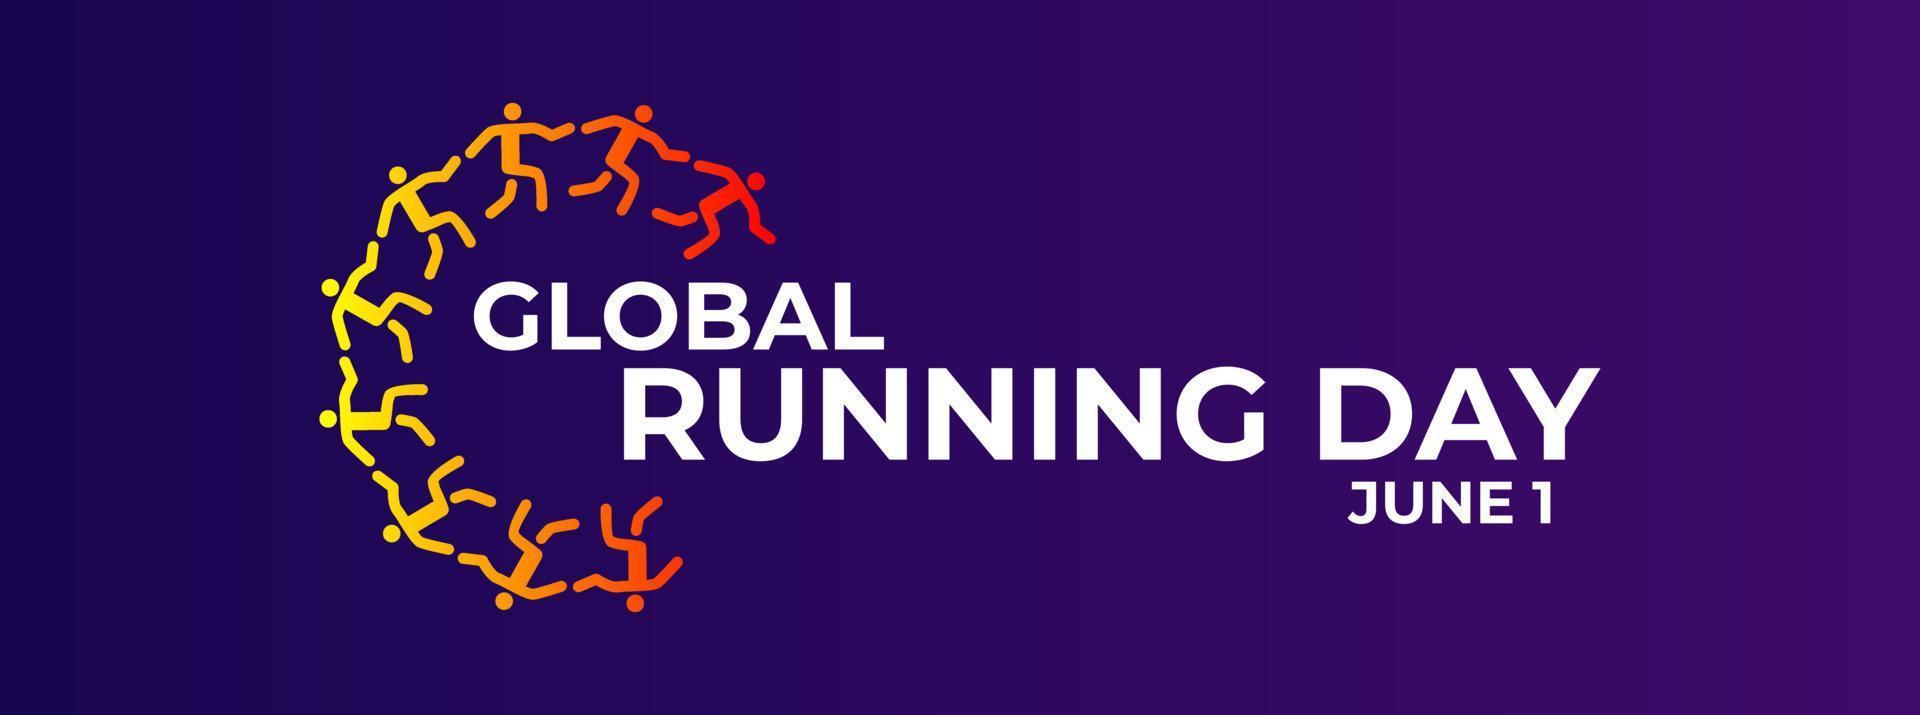 Global Running Day Concept Vector Design, June 1